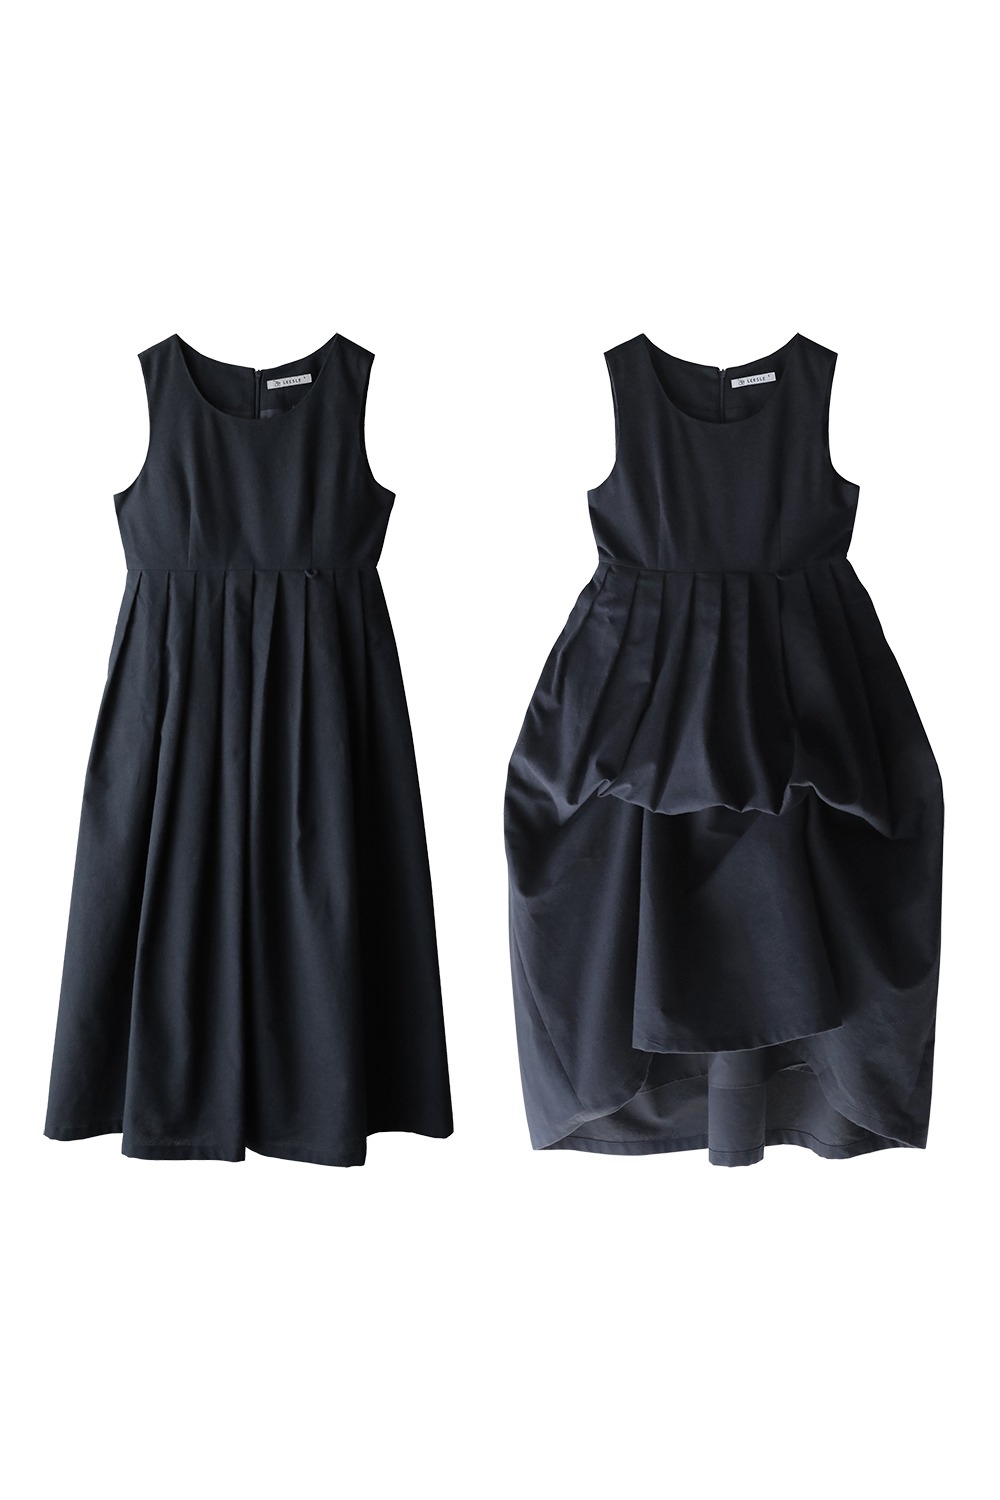 Winter Love Girdle Dress [Black]